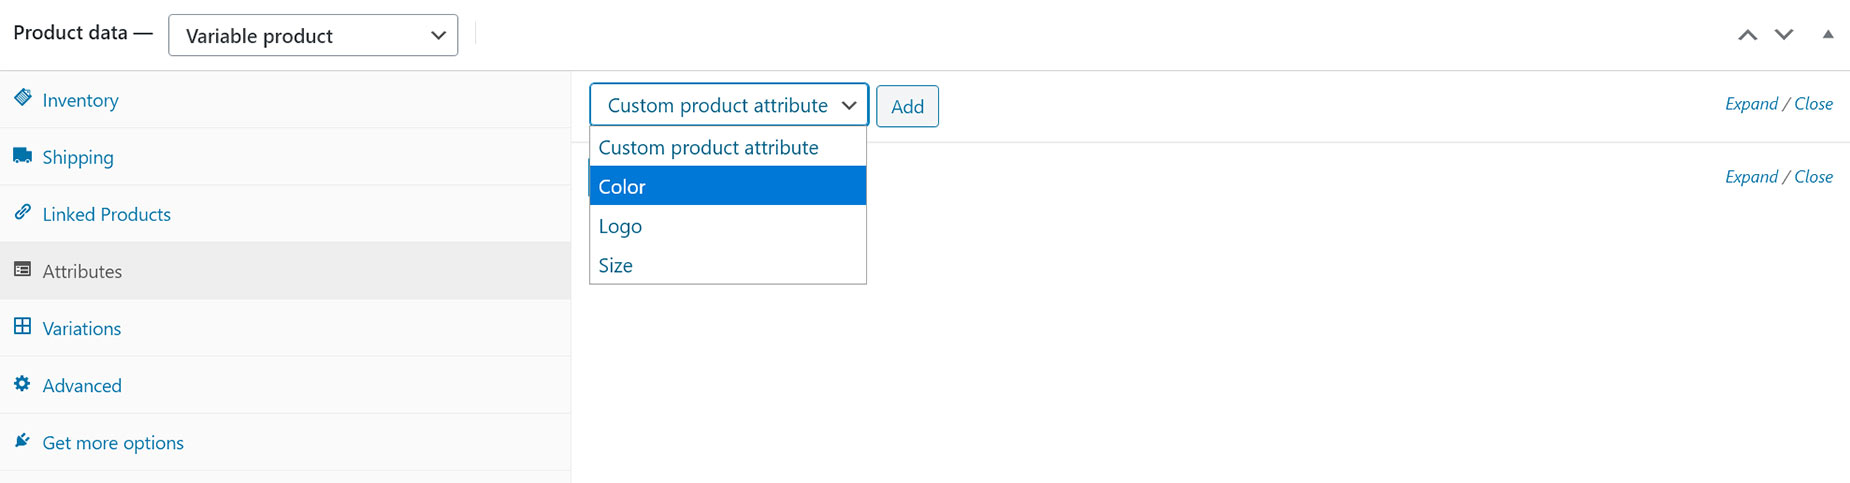 Add Custom Product Attributes